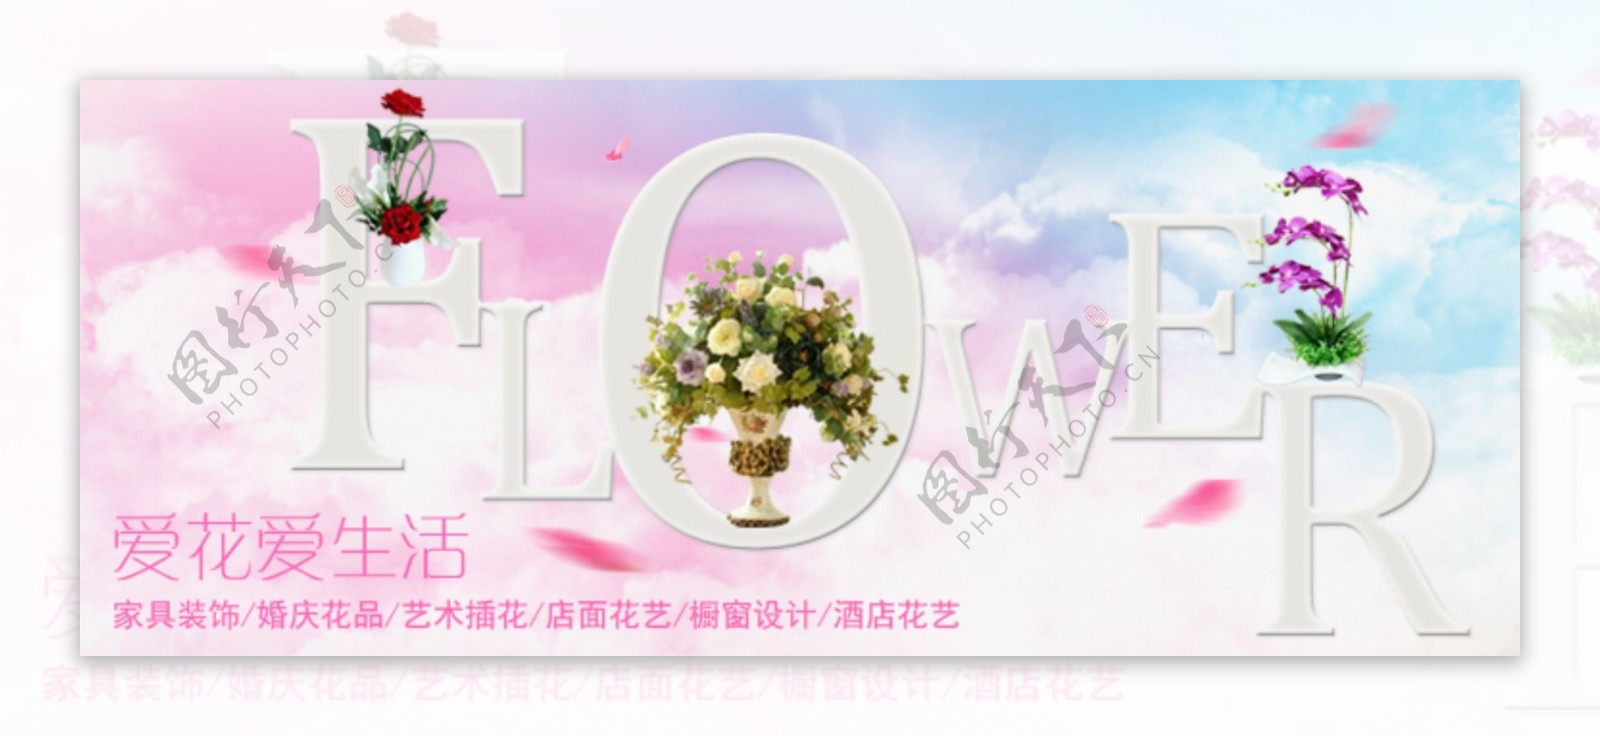 flower淘宝广告